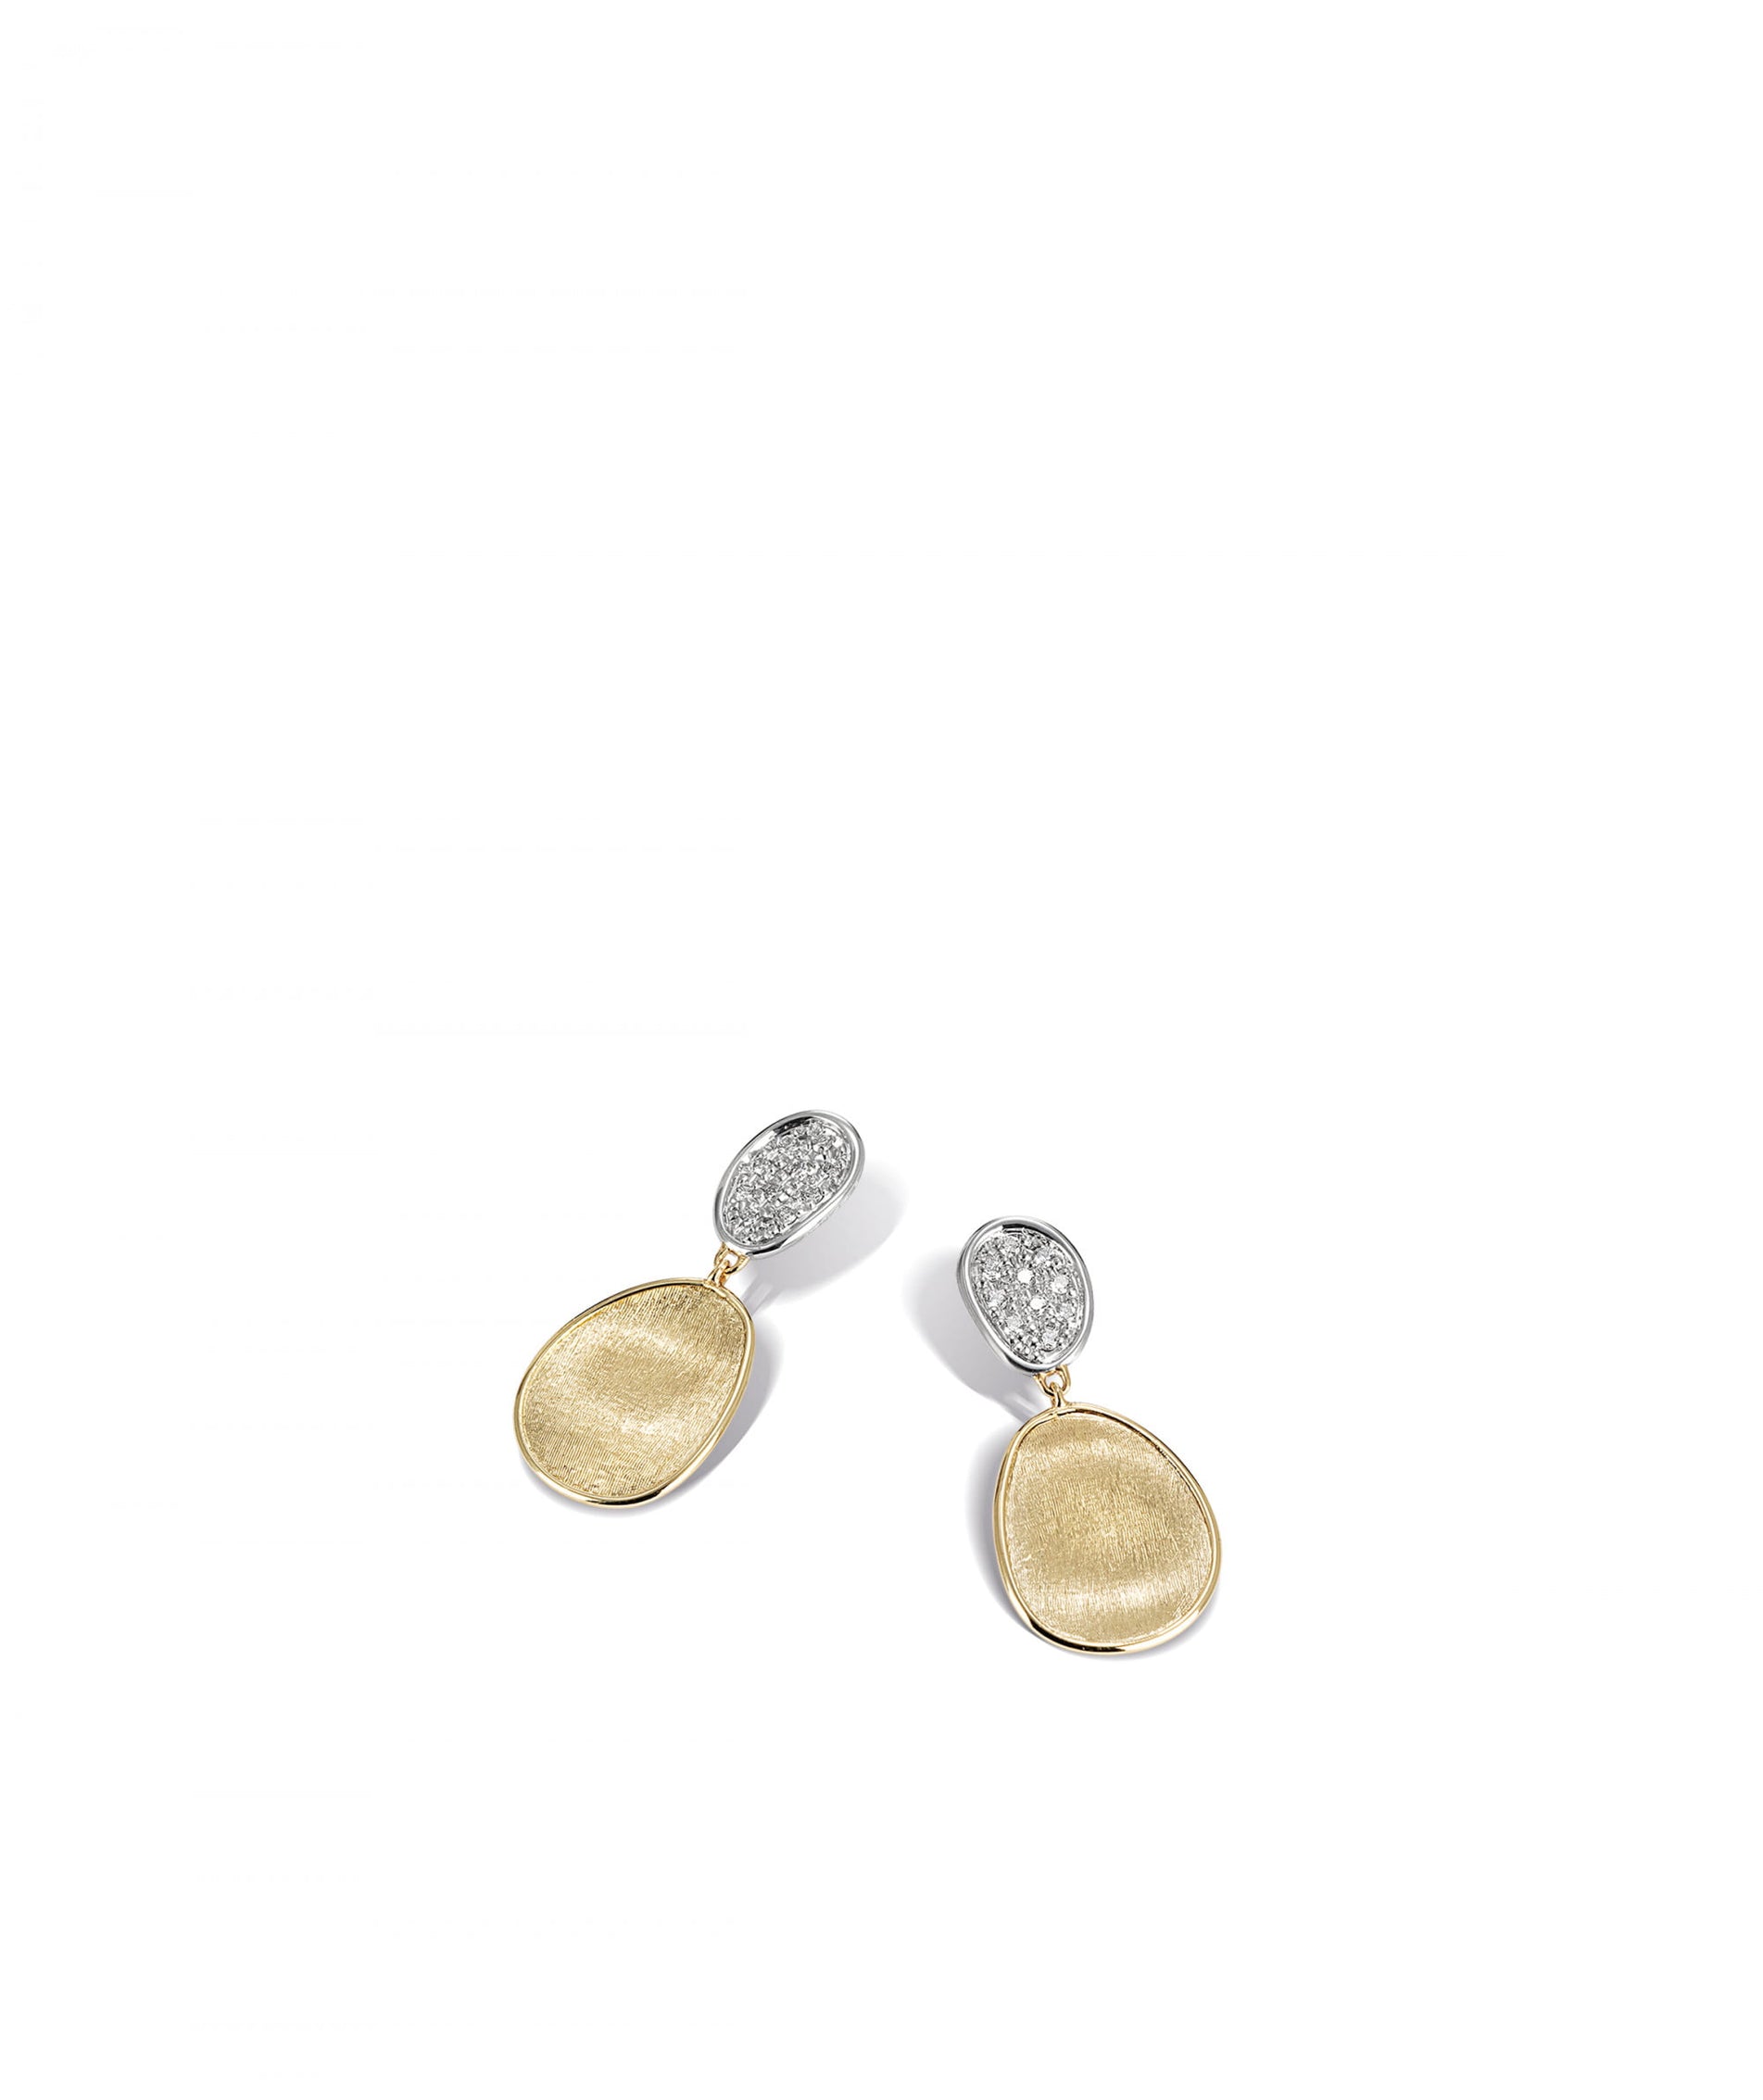 Marco Bicego Lunaria Mini Earrings in 18k Yellow and White Gold with Diamonds - Orsini Jewellers NZ